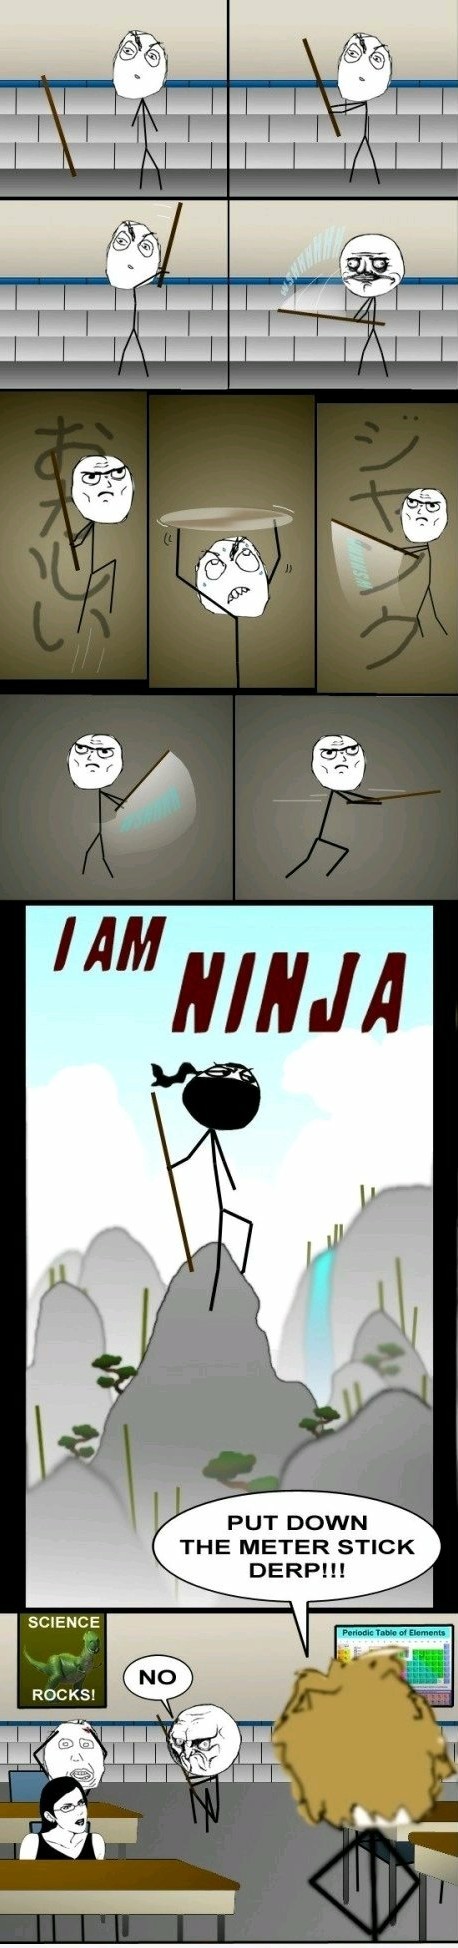 Ninja - meme